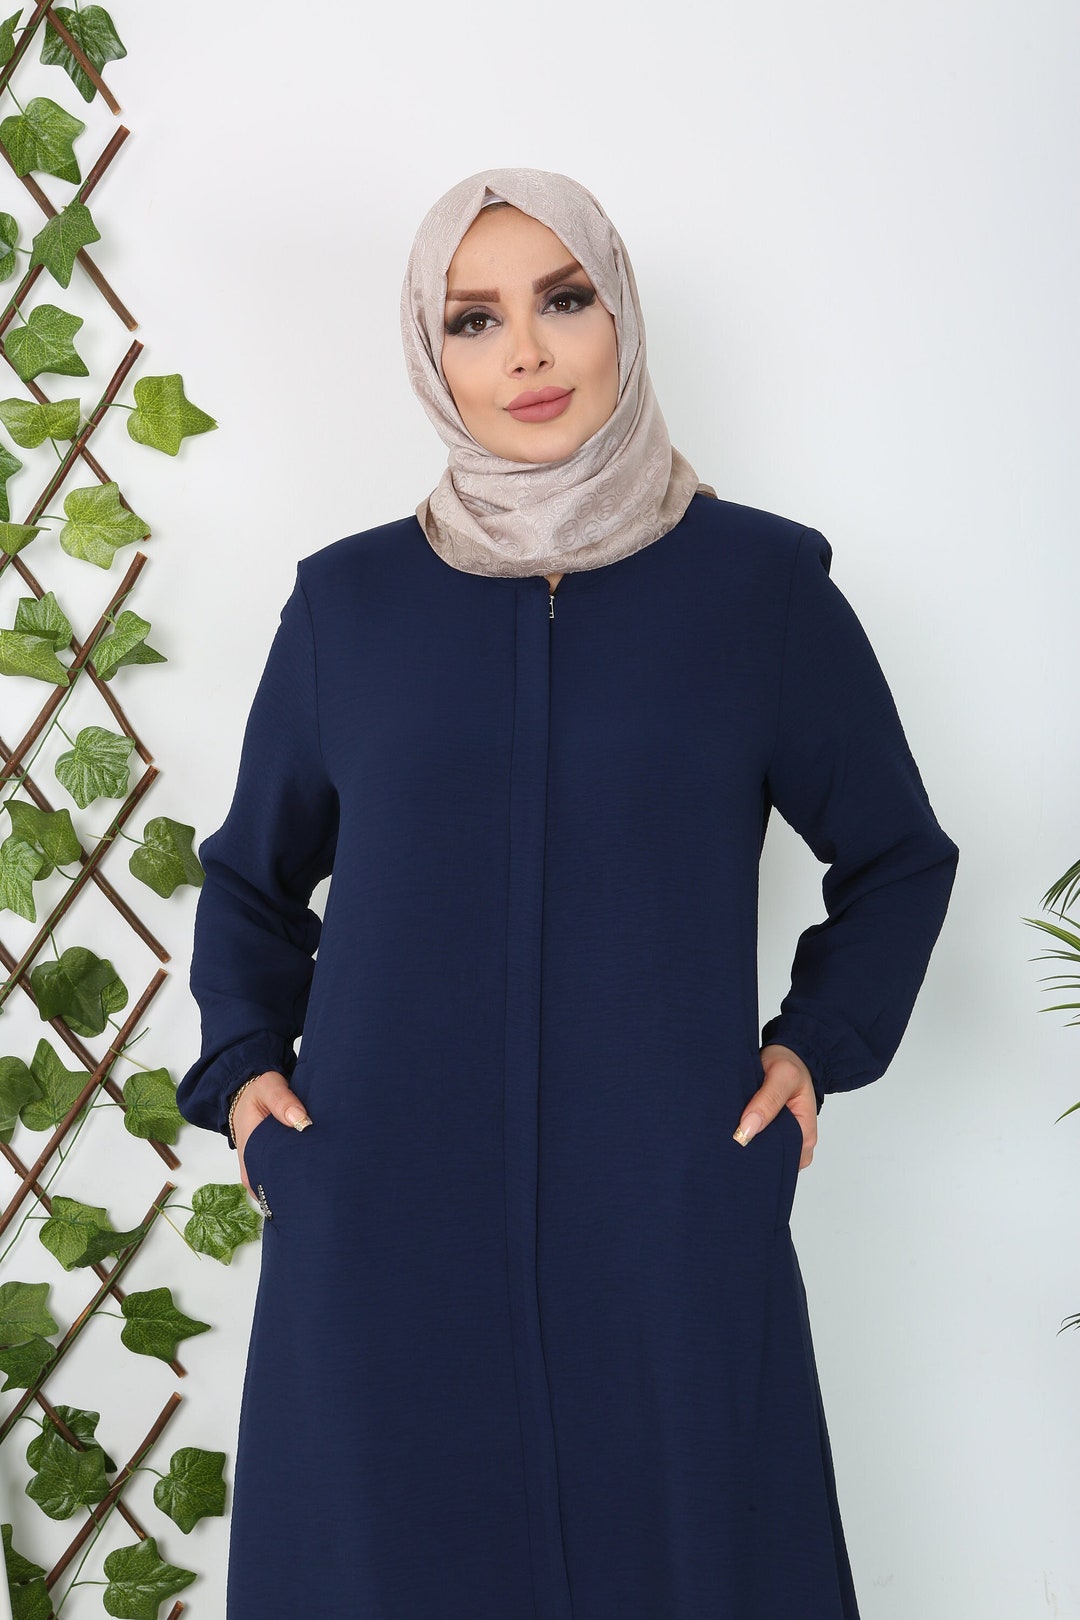 Abaya for Women's Long Sleeve Aerobin Fabric Navy Blue Muslim Abaya ...